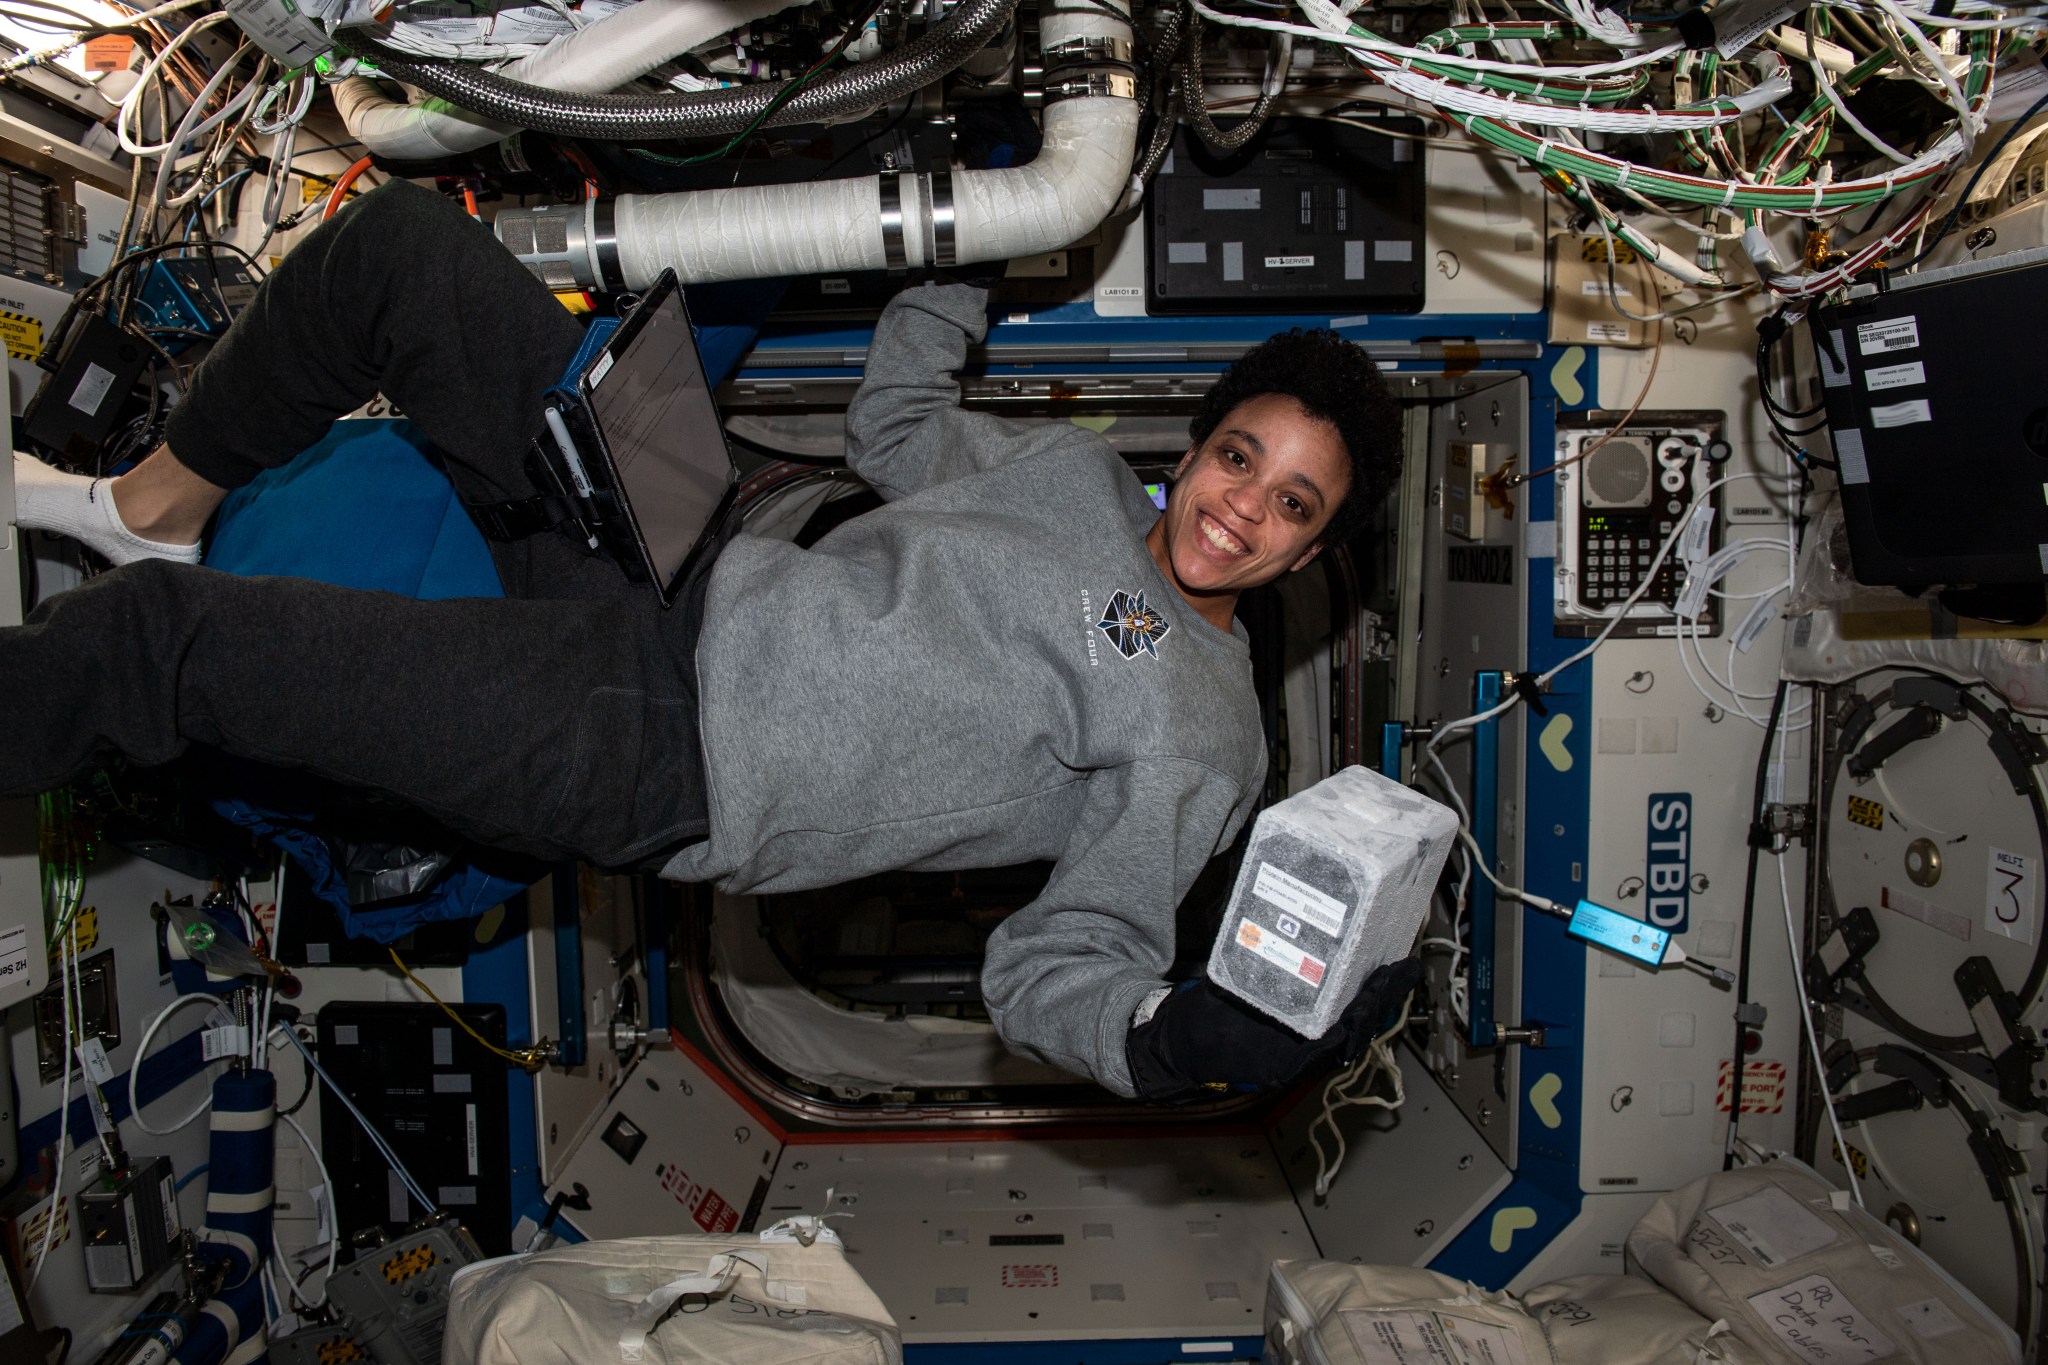 Astronaut Watkins working in zero gravity holding a bioreactor.